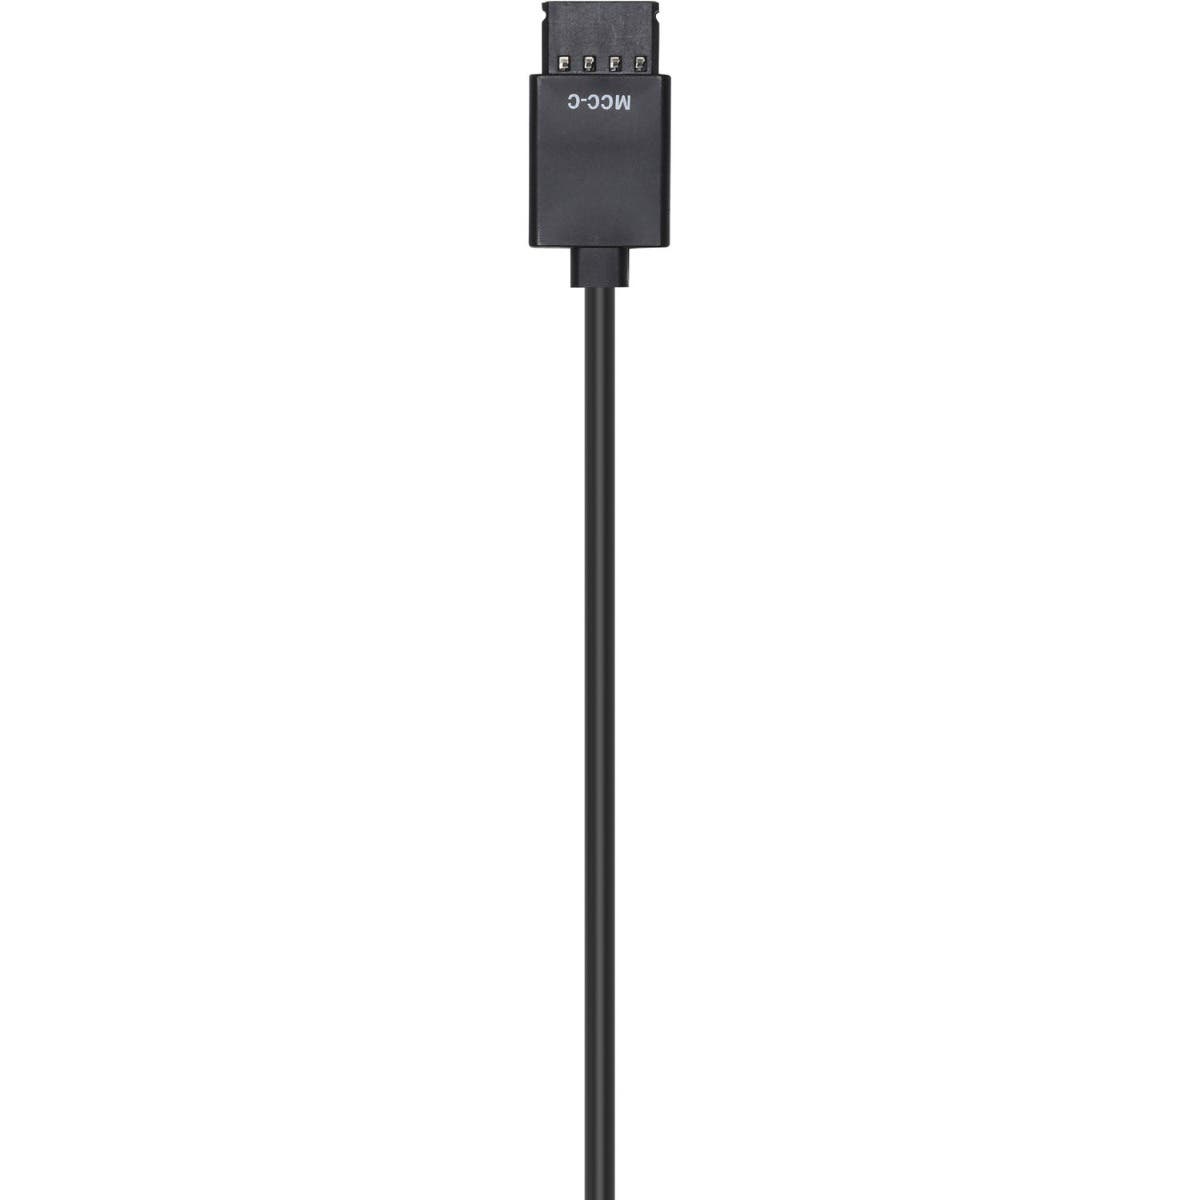 DJI Ronin-S Multi-Camera Control Cable (USB Type-C)